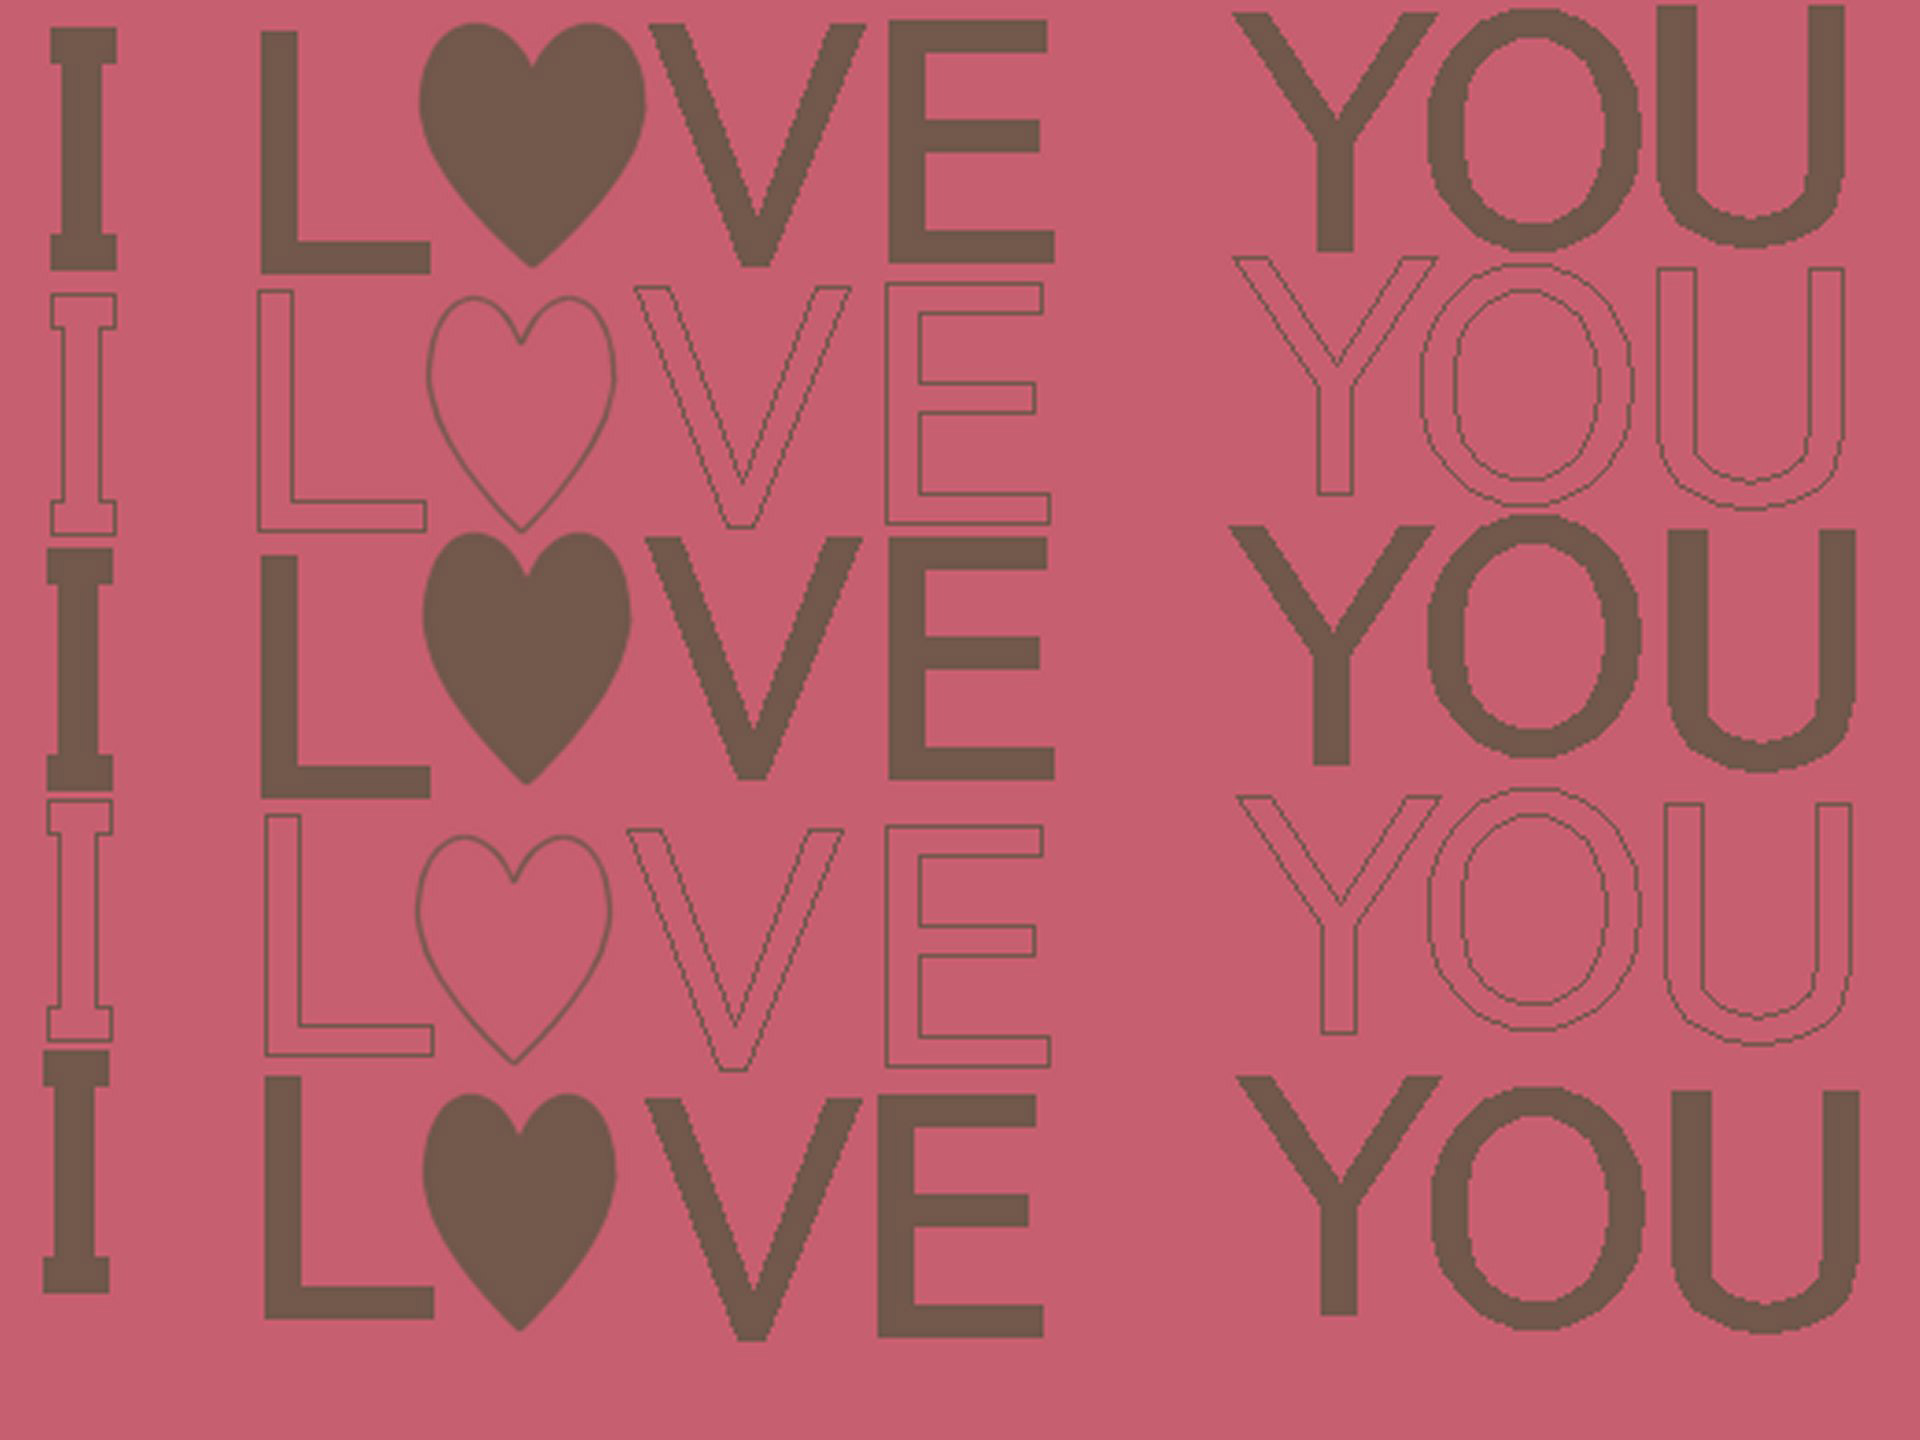 I love you шрифты. I Love you шрифт. Love is шрифт Loves you. Сени севиерум Ашкым. Шрифт для кап Кут Love.